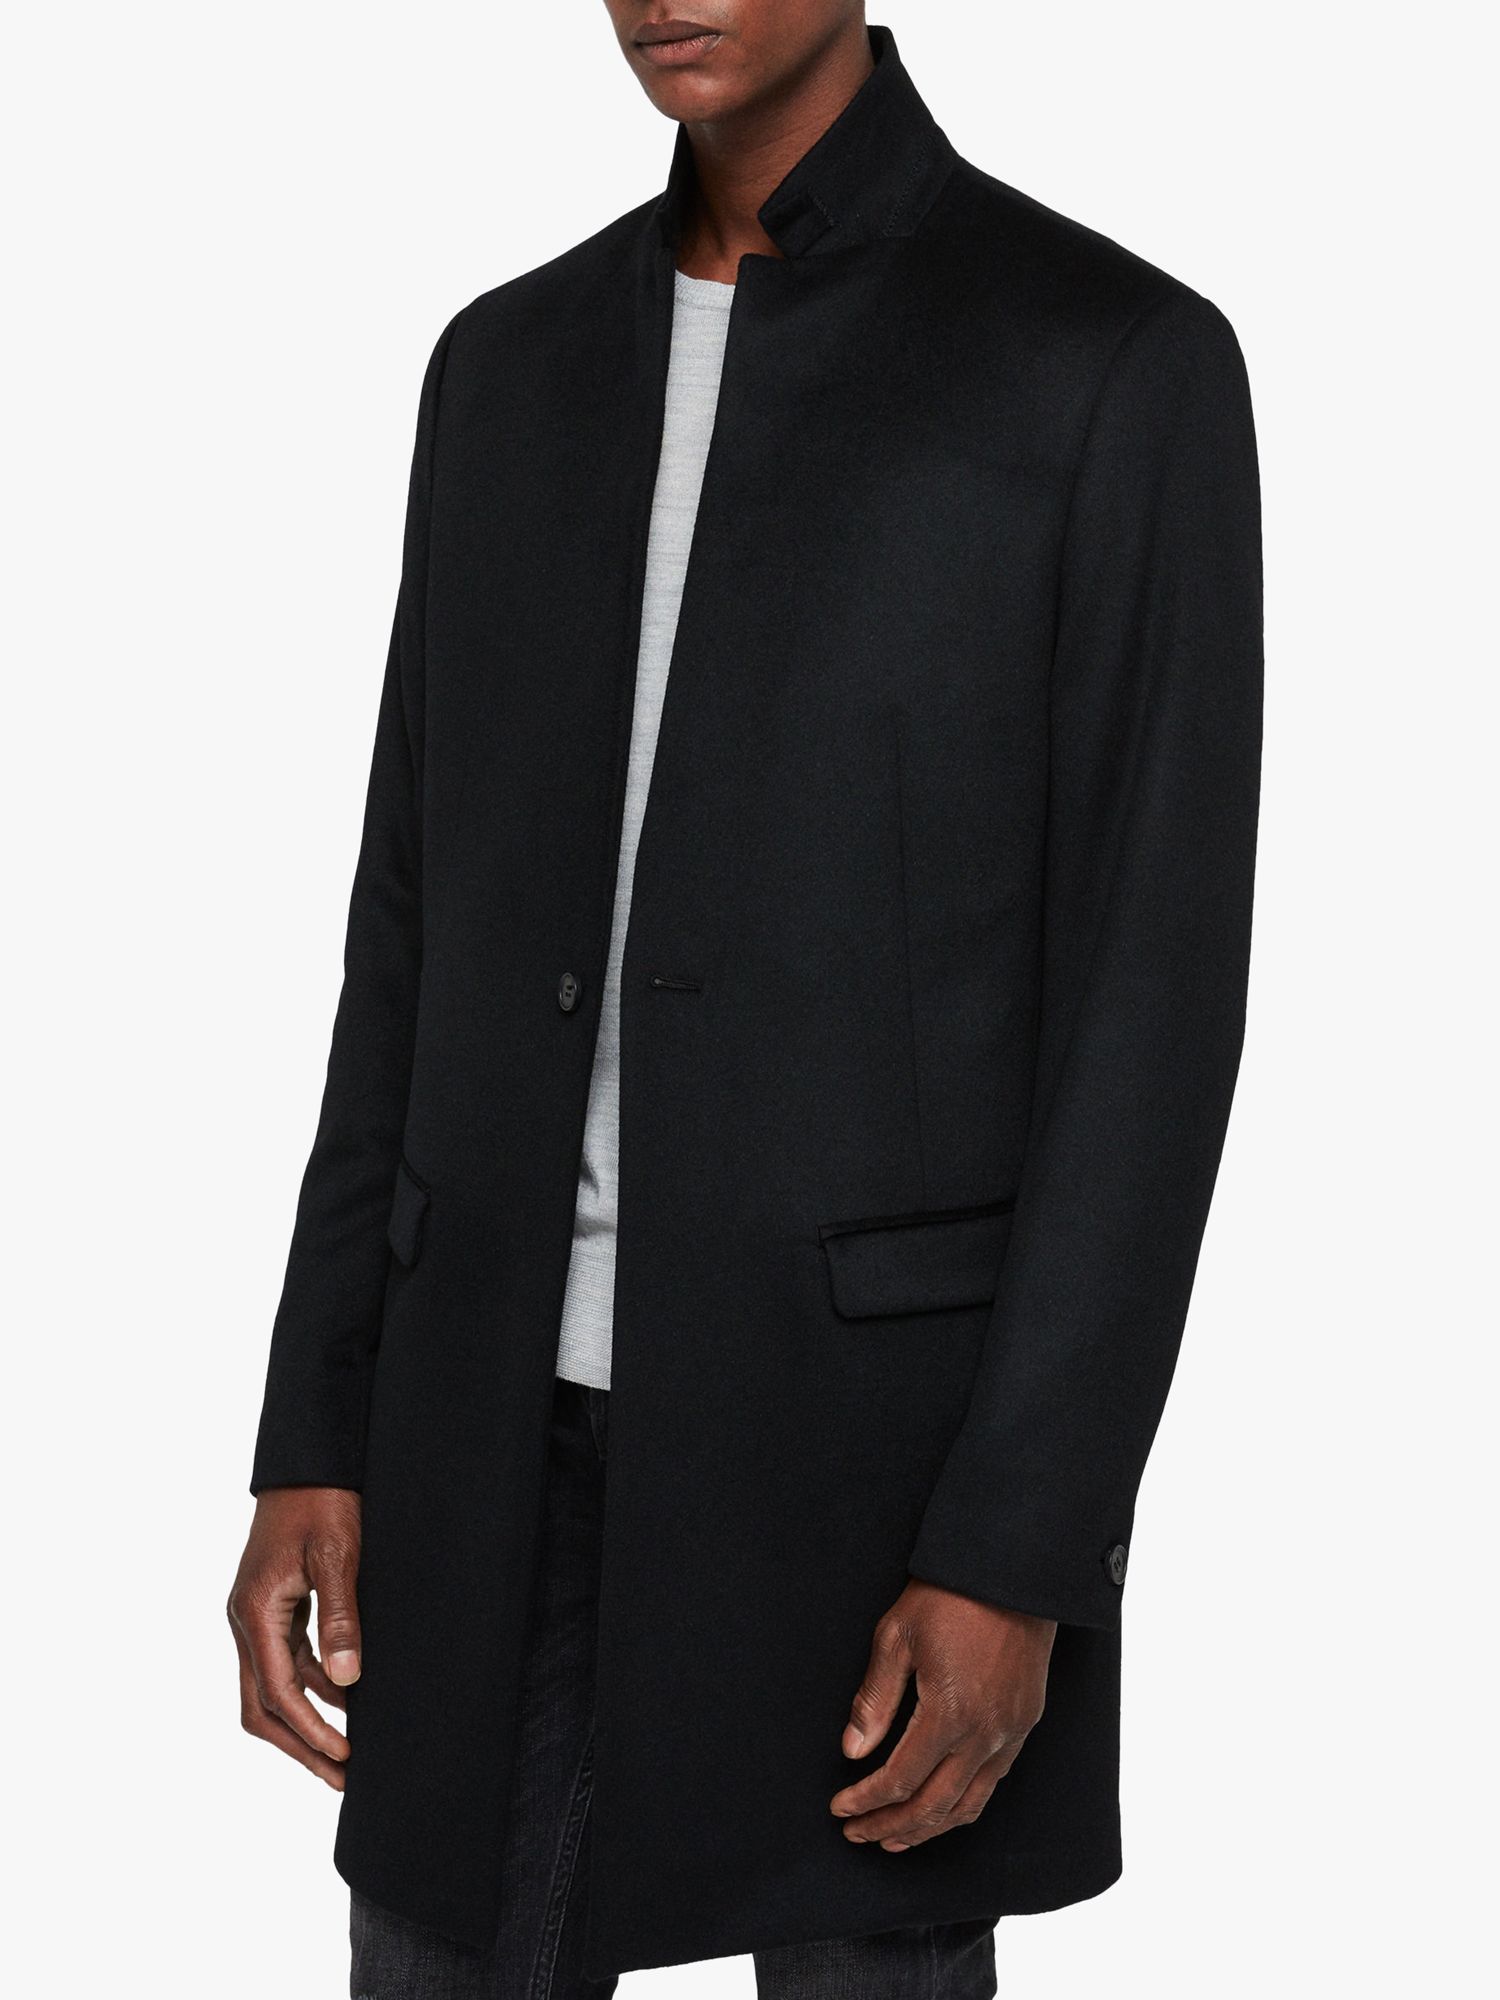 AllSaints Bodell Wool Tailored Coat, Black at John Lewis & Partners